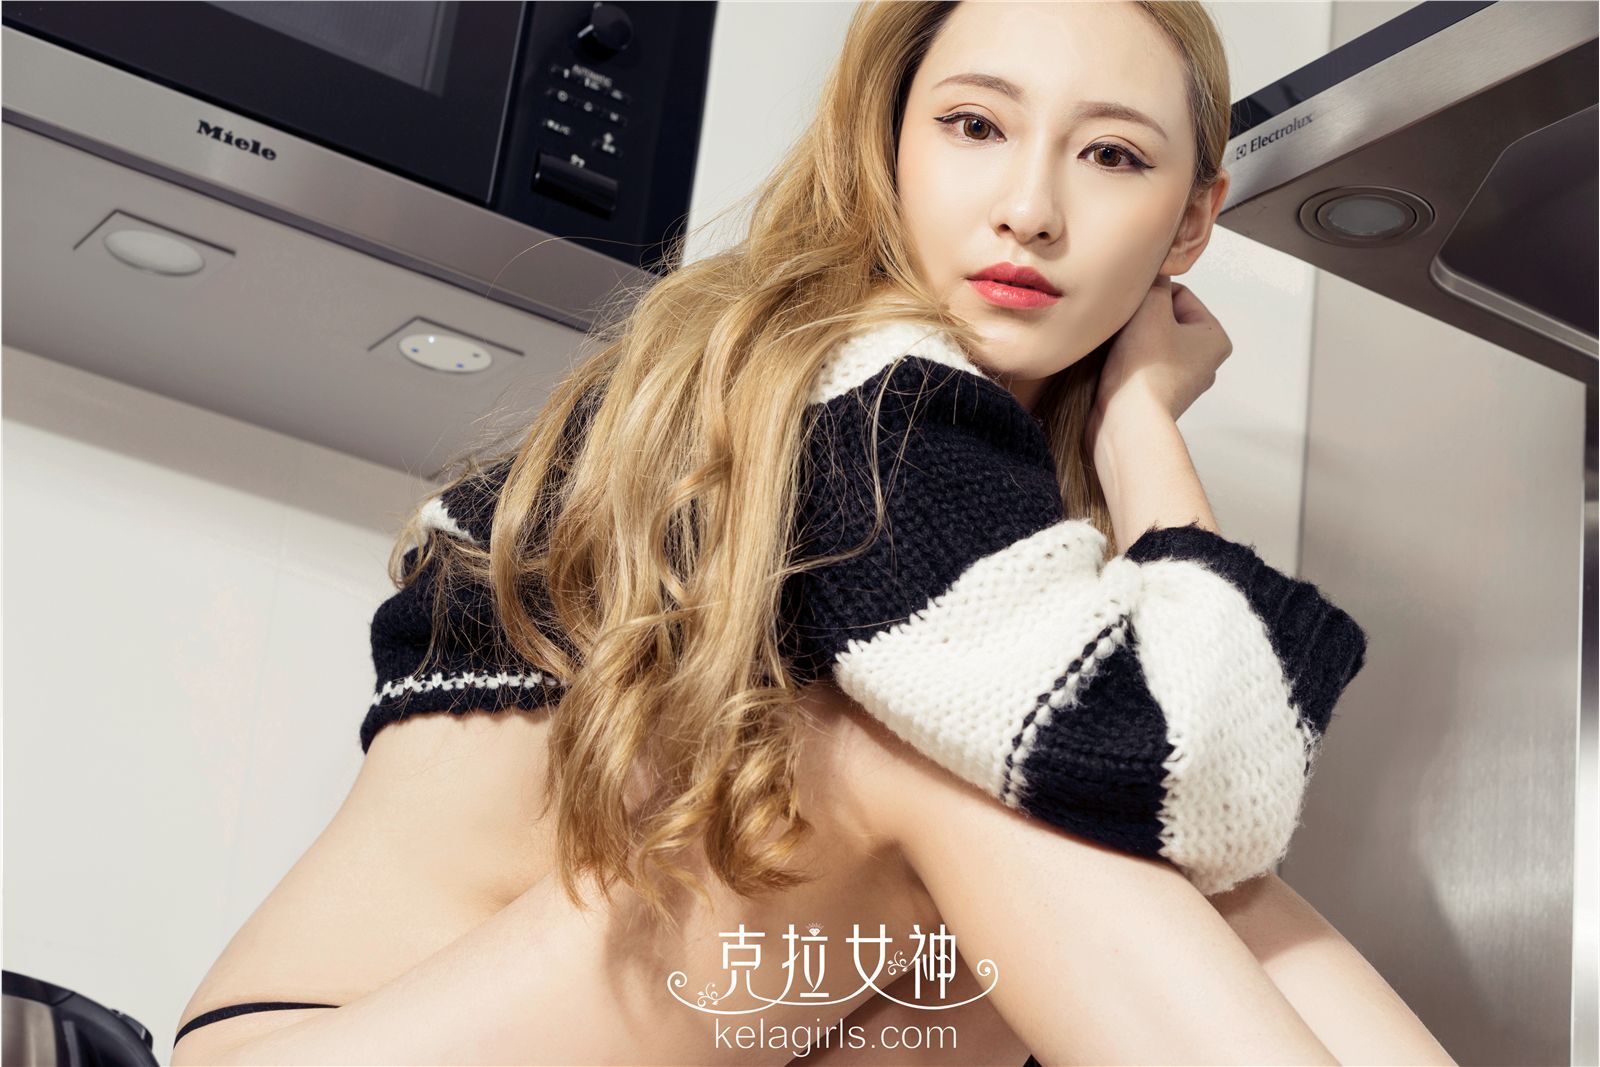 [Kela girls] Kela goddess 2017-02-18 Chen Ying blonde laundry girl